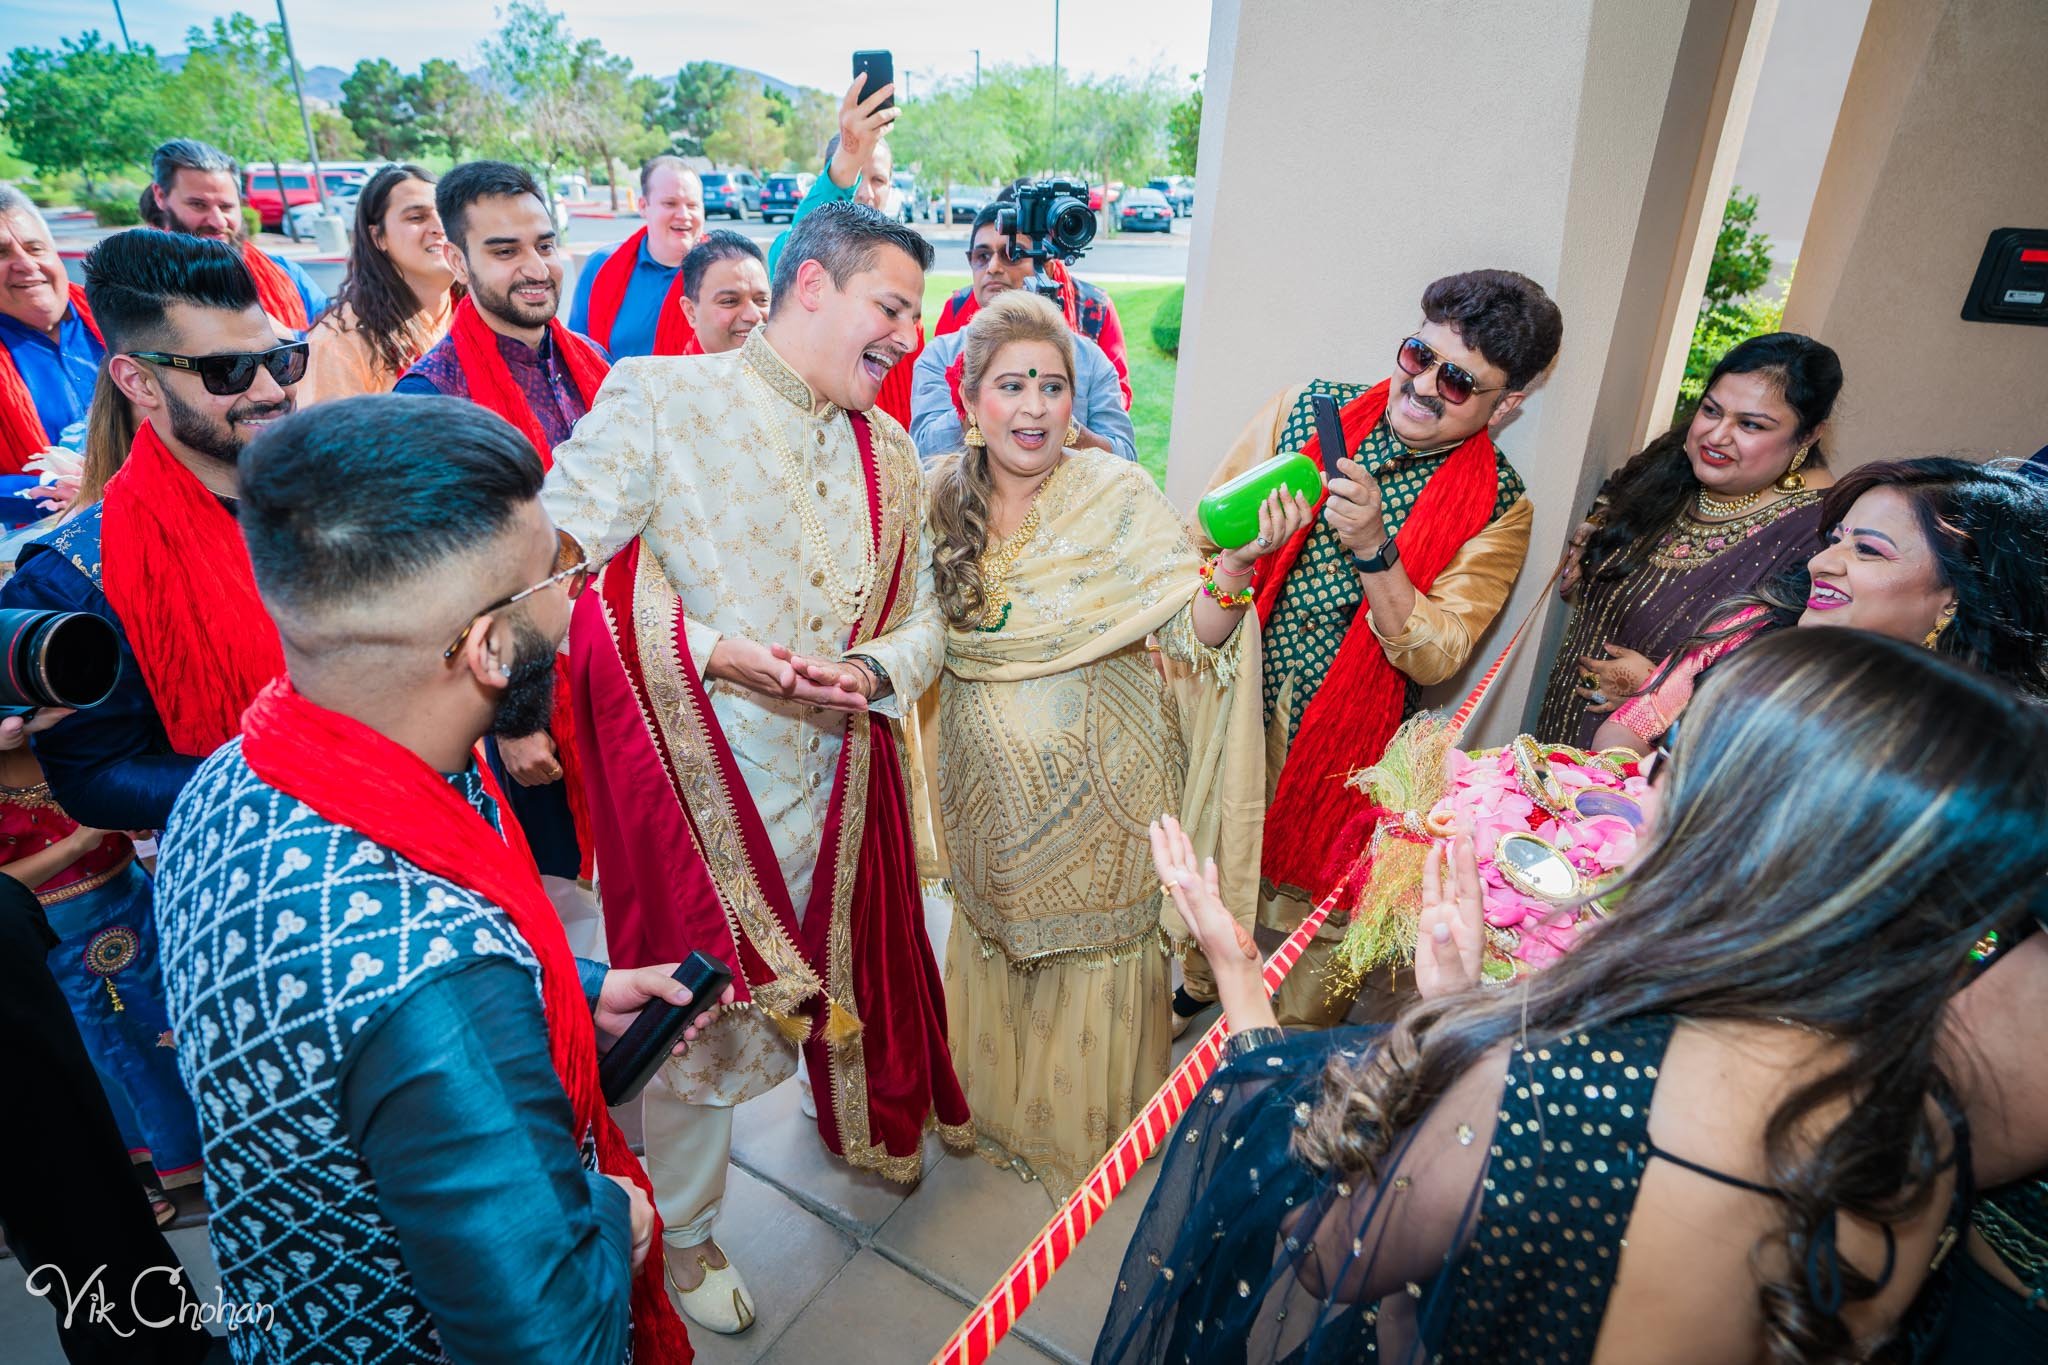 2022-06-09-Annie-&-Steven-Las-Vegas-Indian-Wedding-Ceremony-Photography-Vik-Chohan-Photography-Photo-Booth-Social-Media-VCP-049.jpg